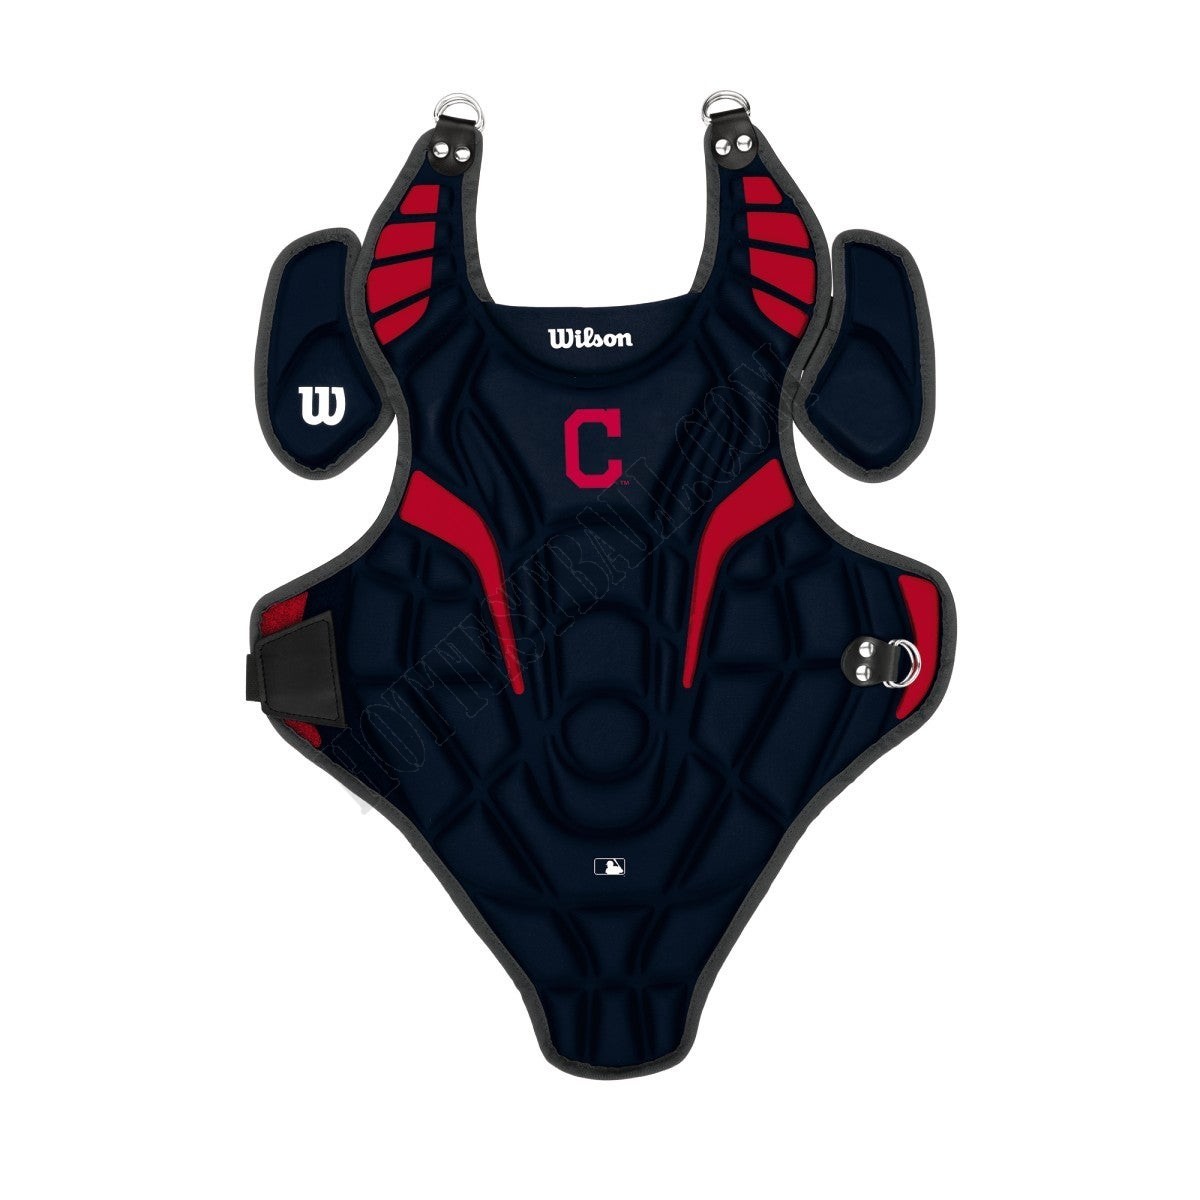 EZ Gear Catcher's Kit - Cleveland Indians - Wilson Discount Store - EZ Gear Catcher's Kit - Cleveland Indians - Wilson Discount Store